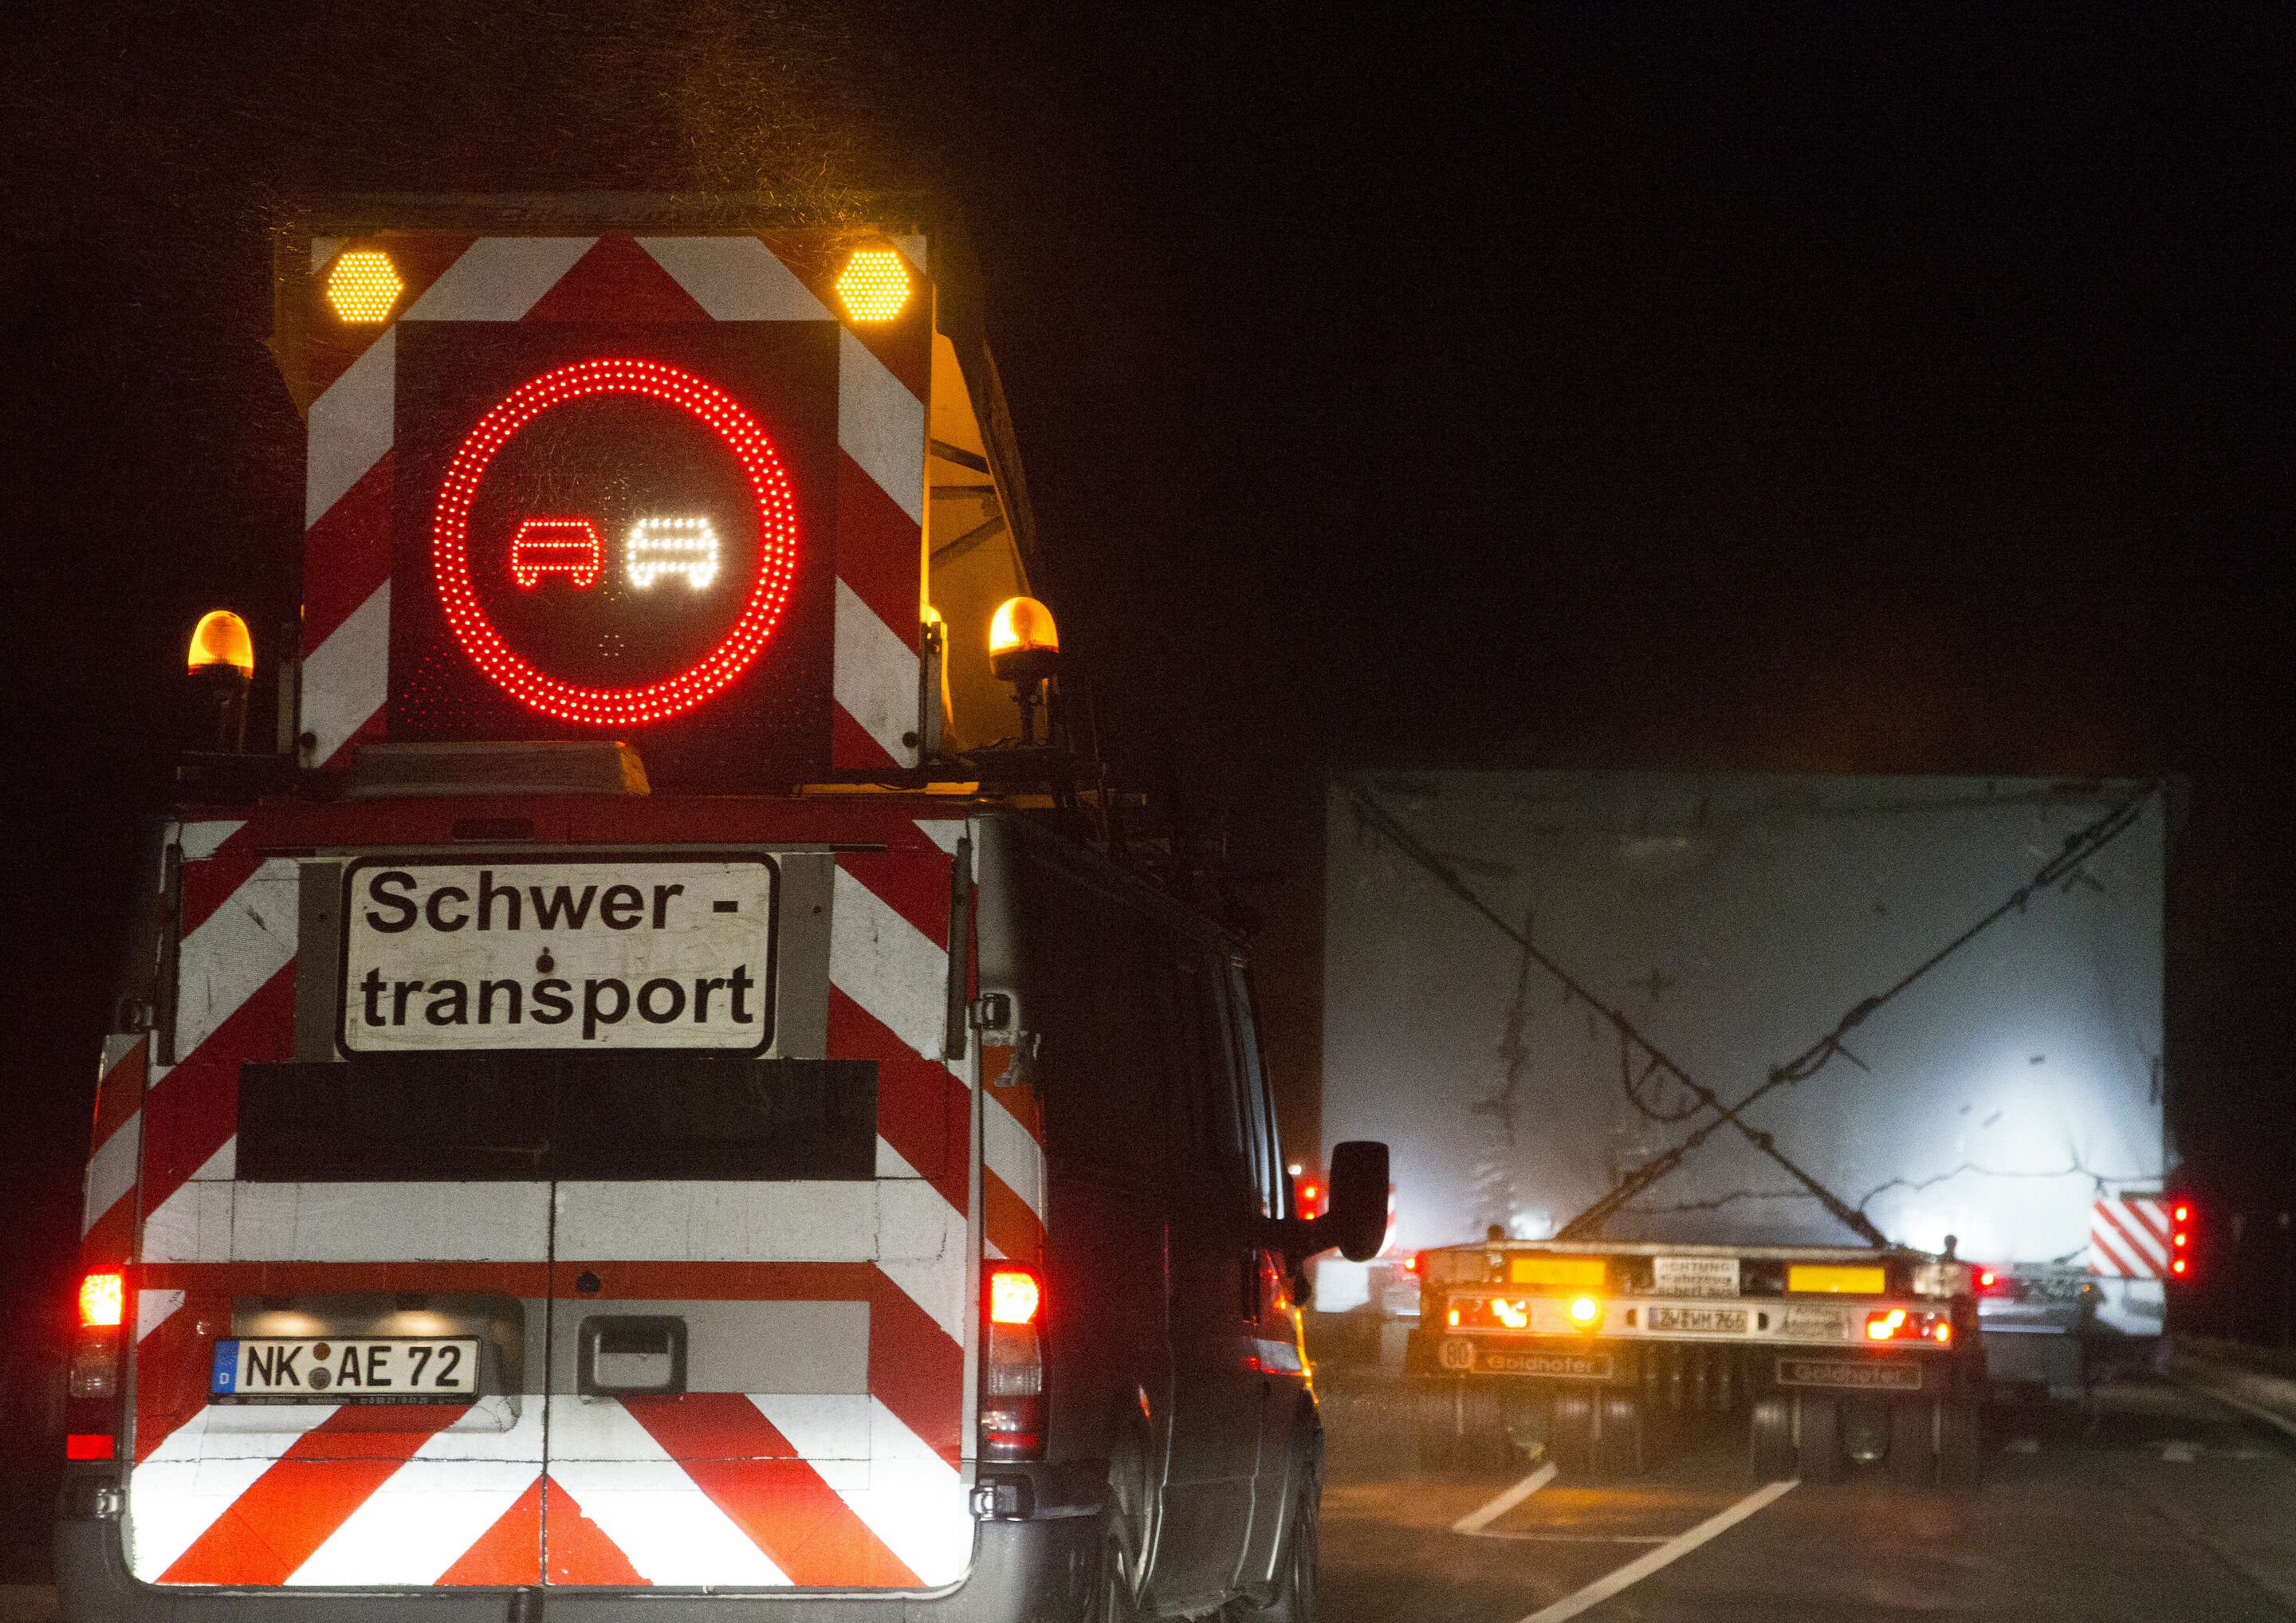 Schwerlasttransport Audi e-gas project